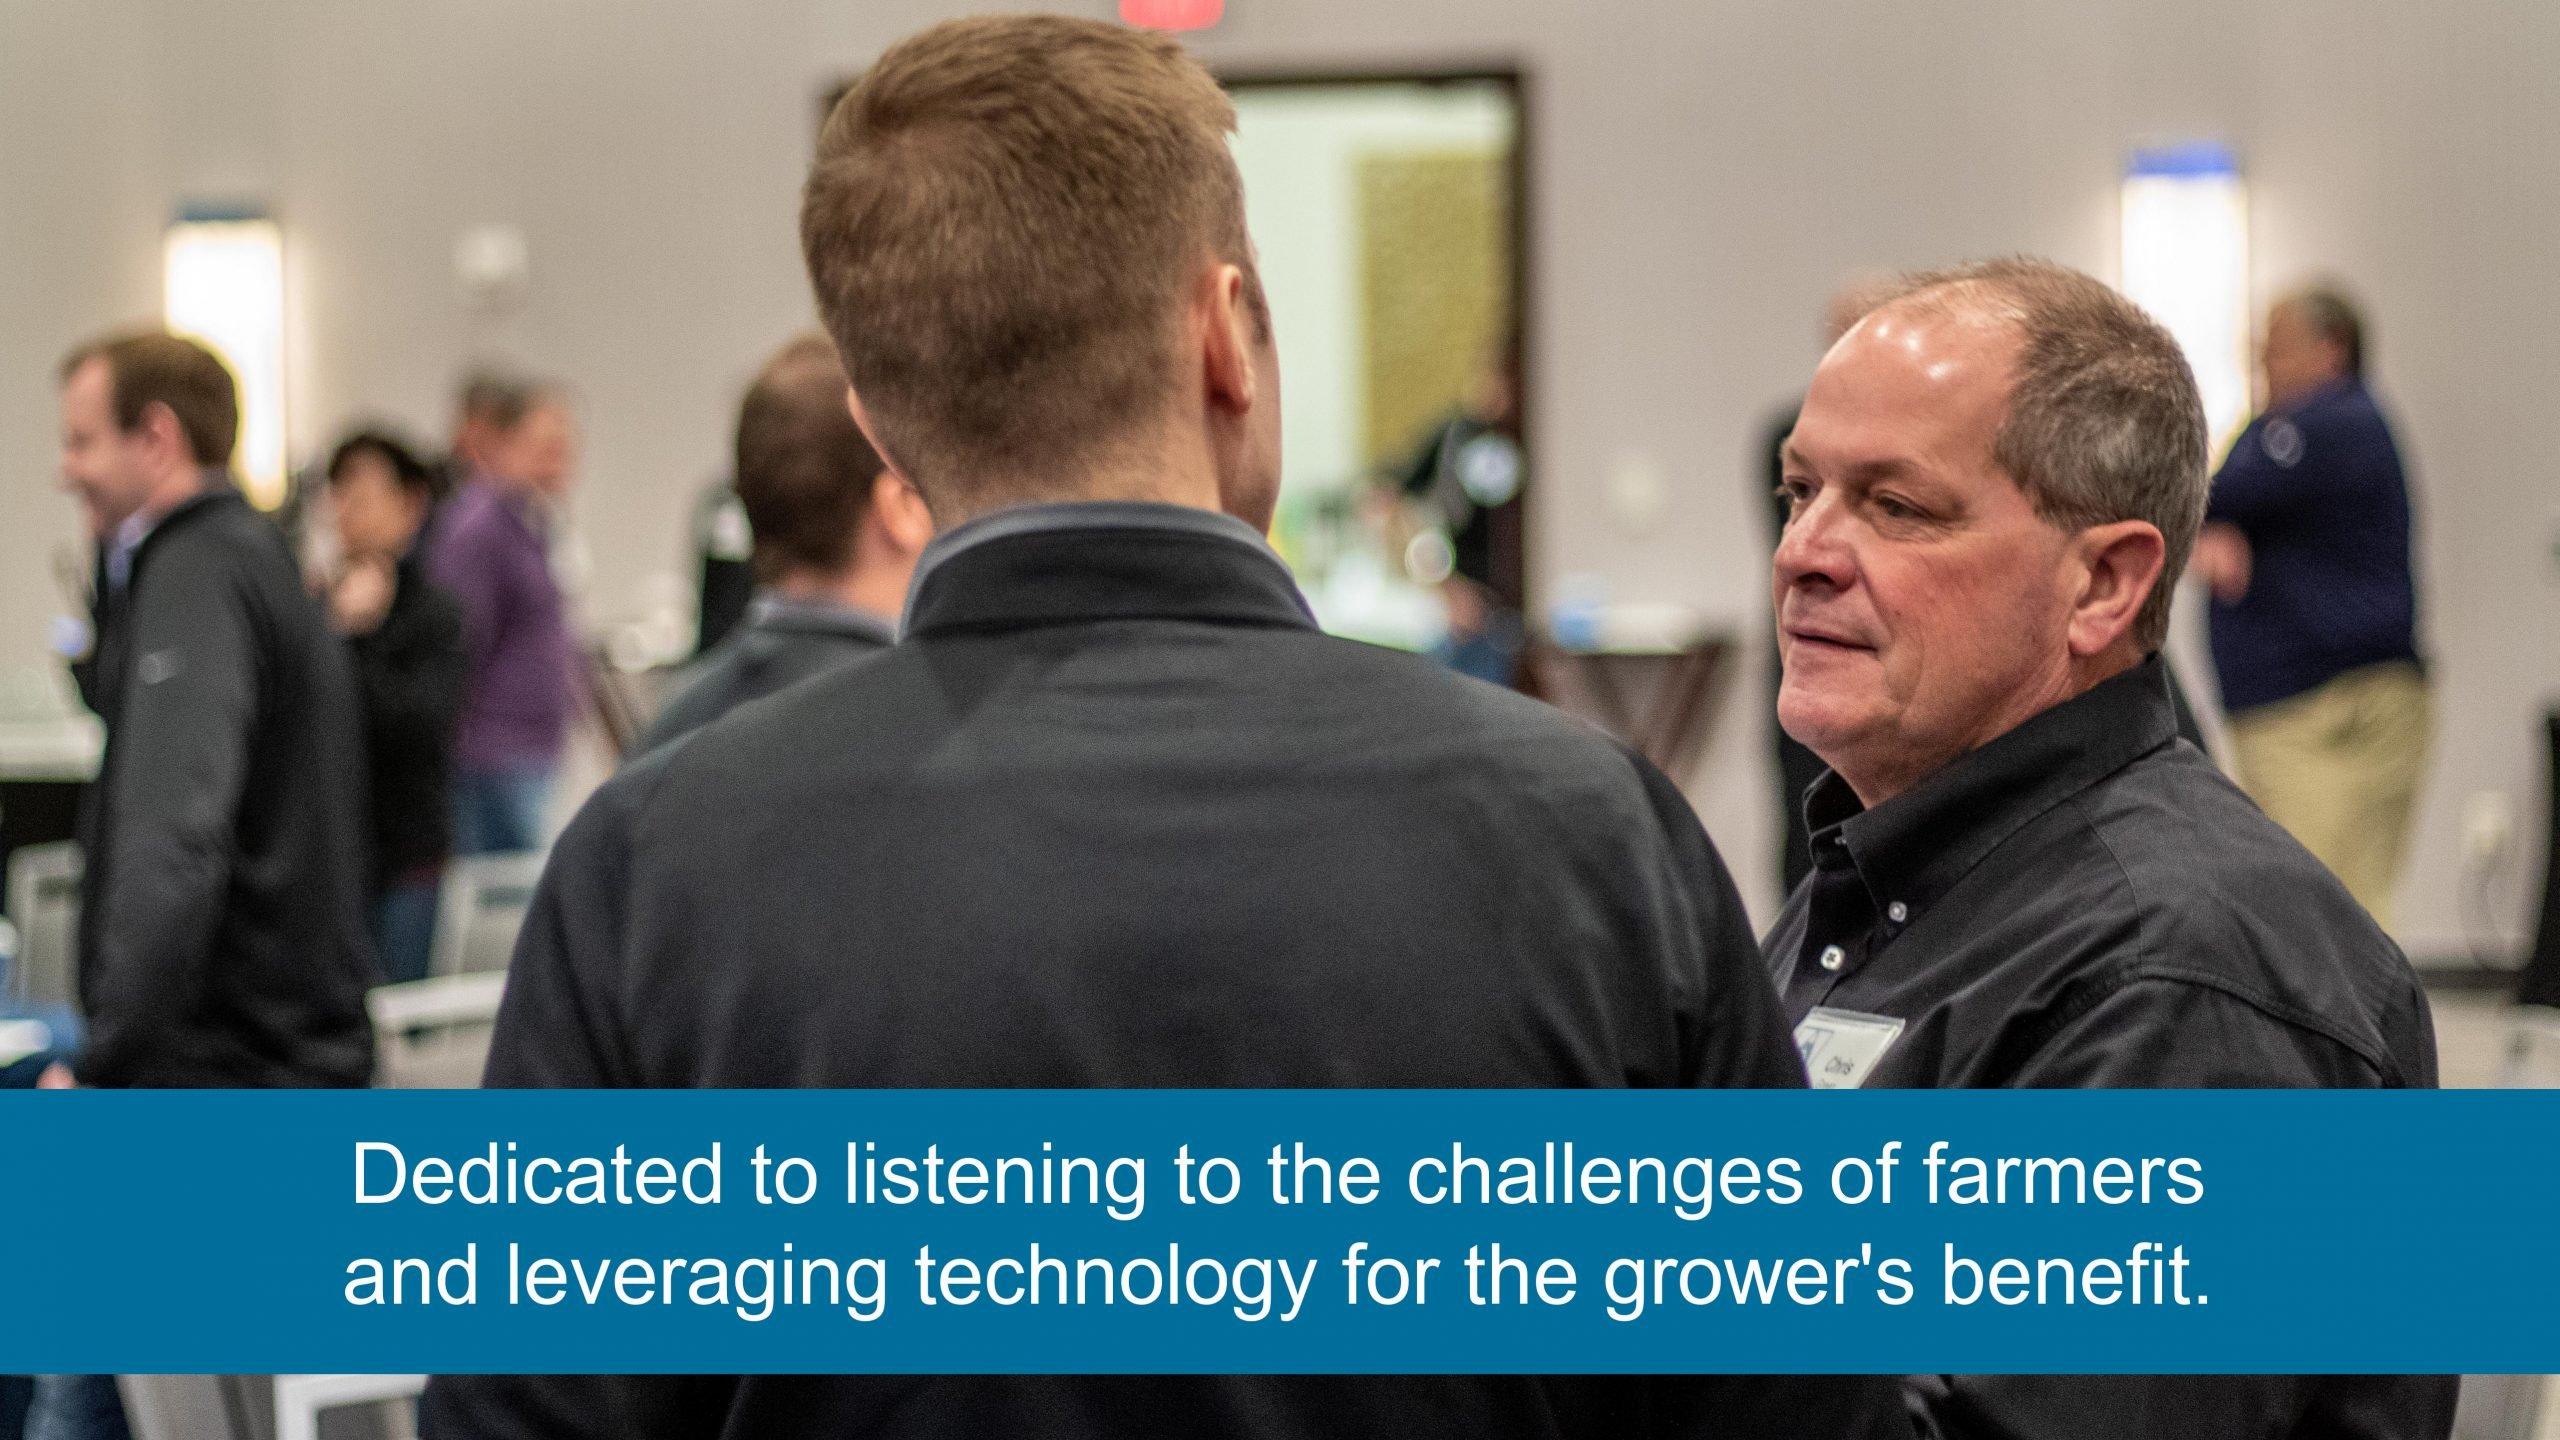 Conservis Customer Success team members listen to farmers' needs